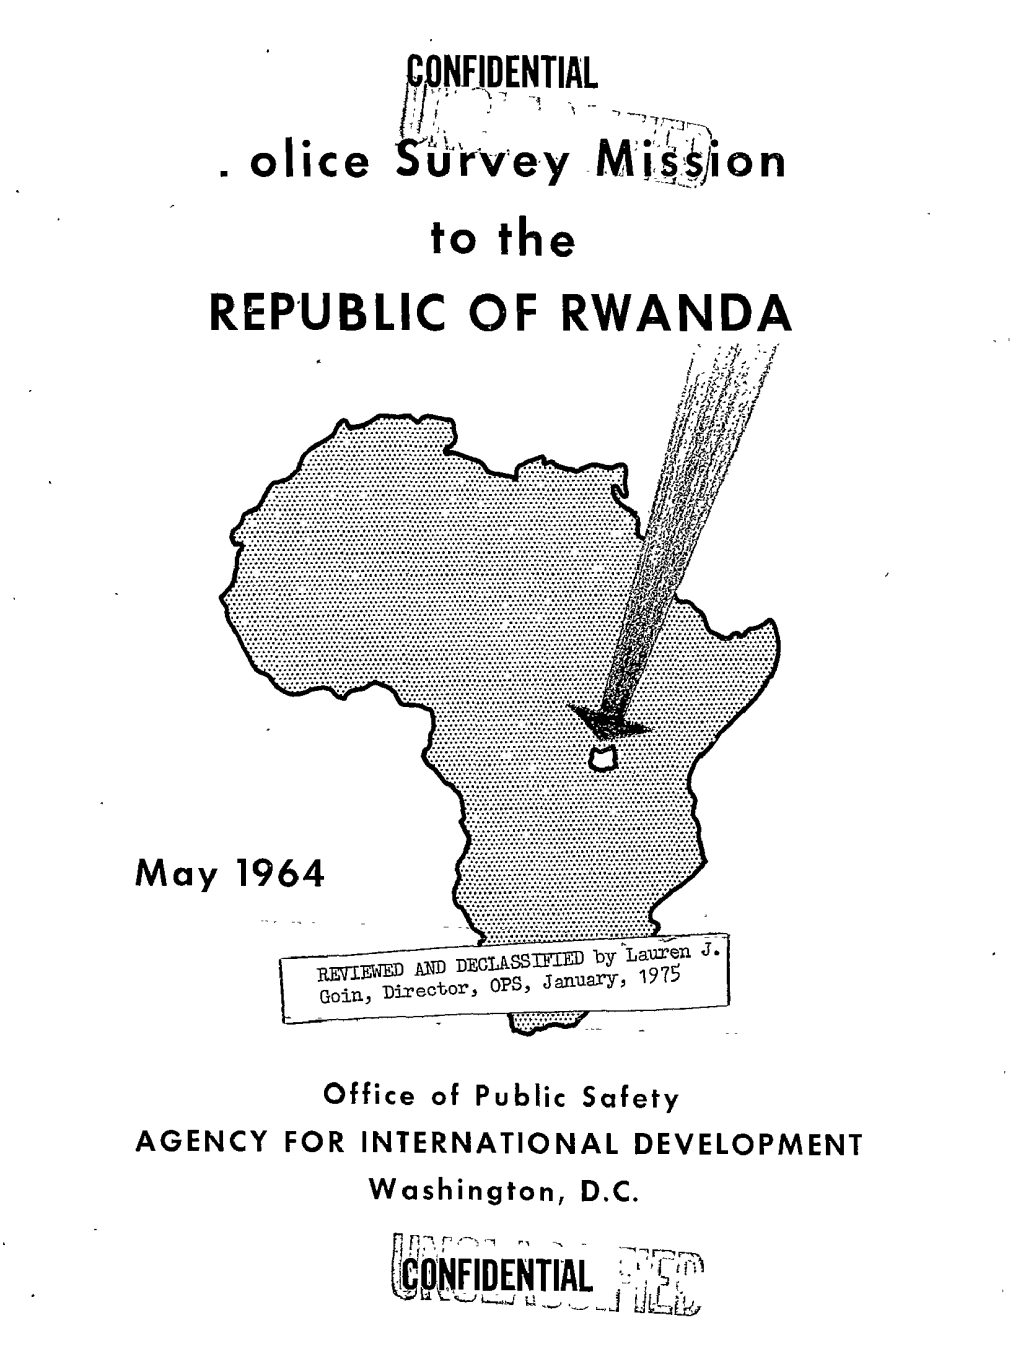 To the REPUBLIC of RWANDA